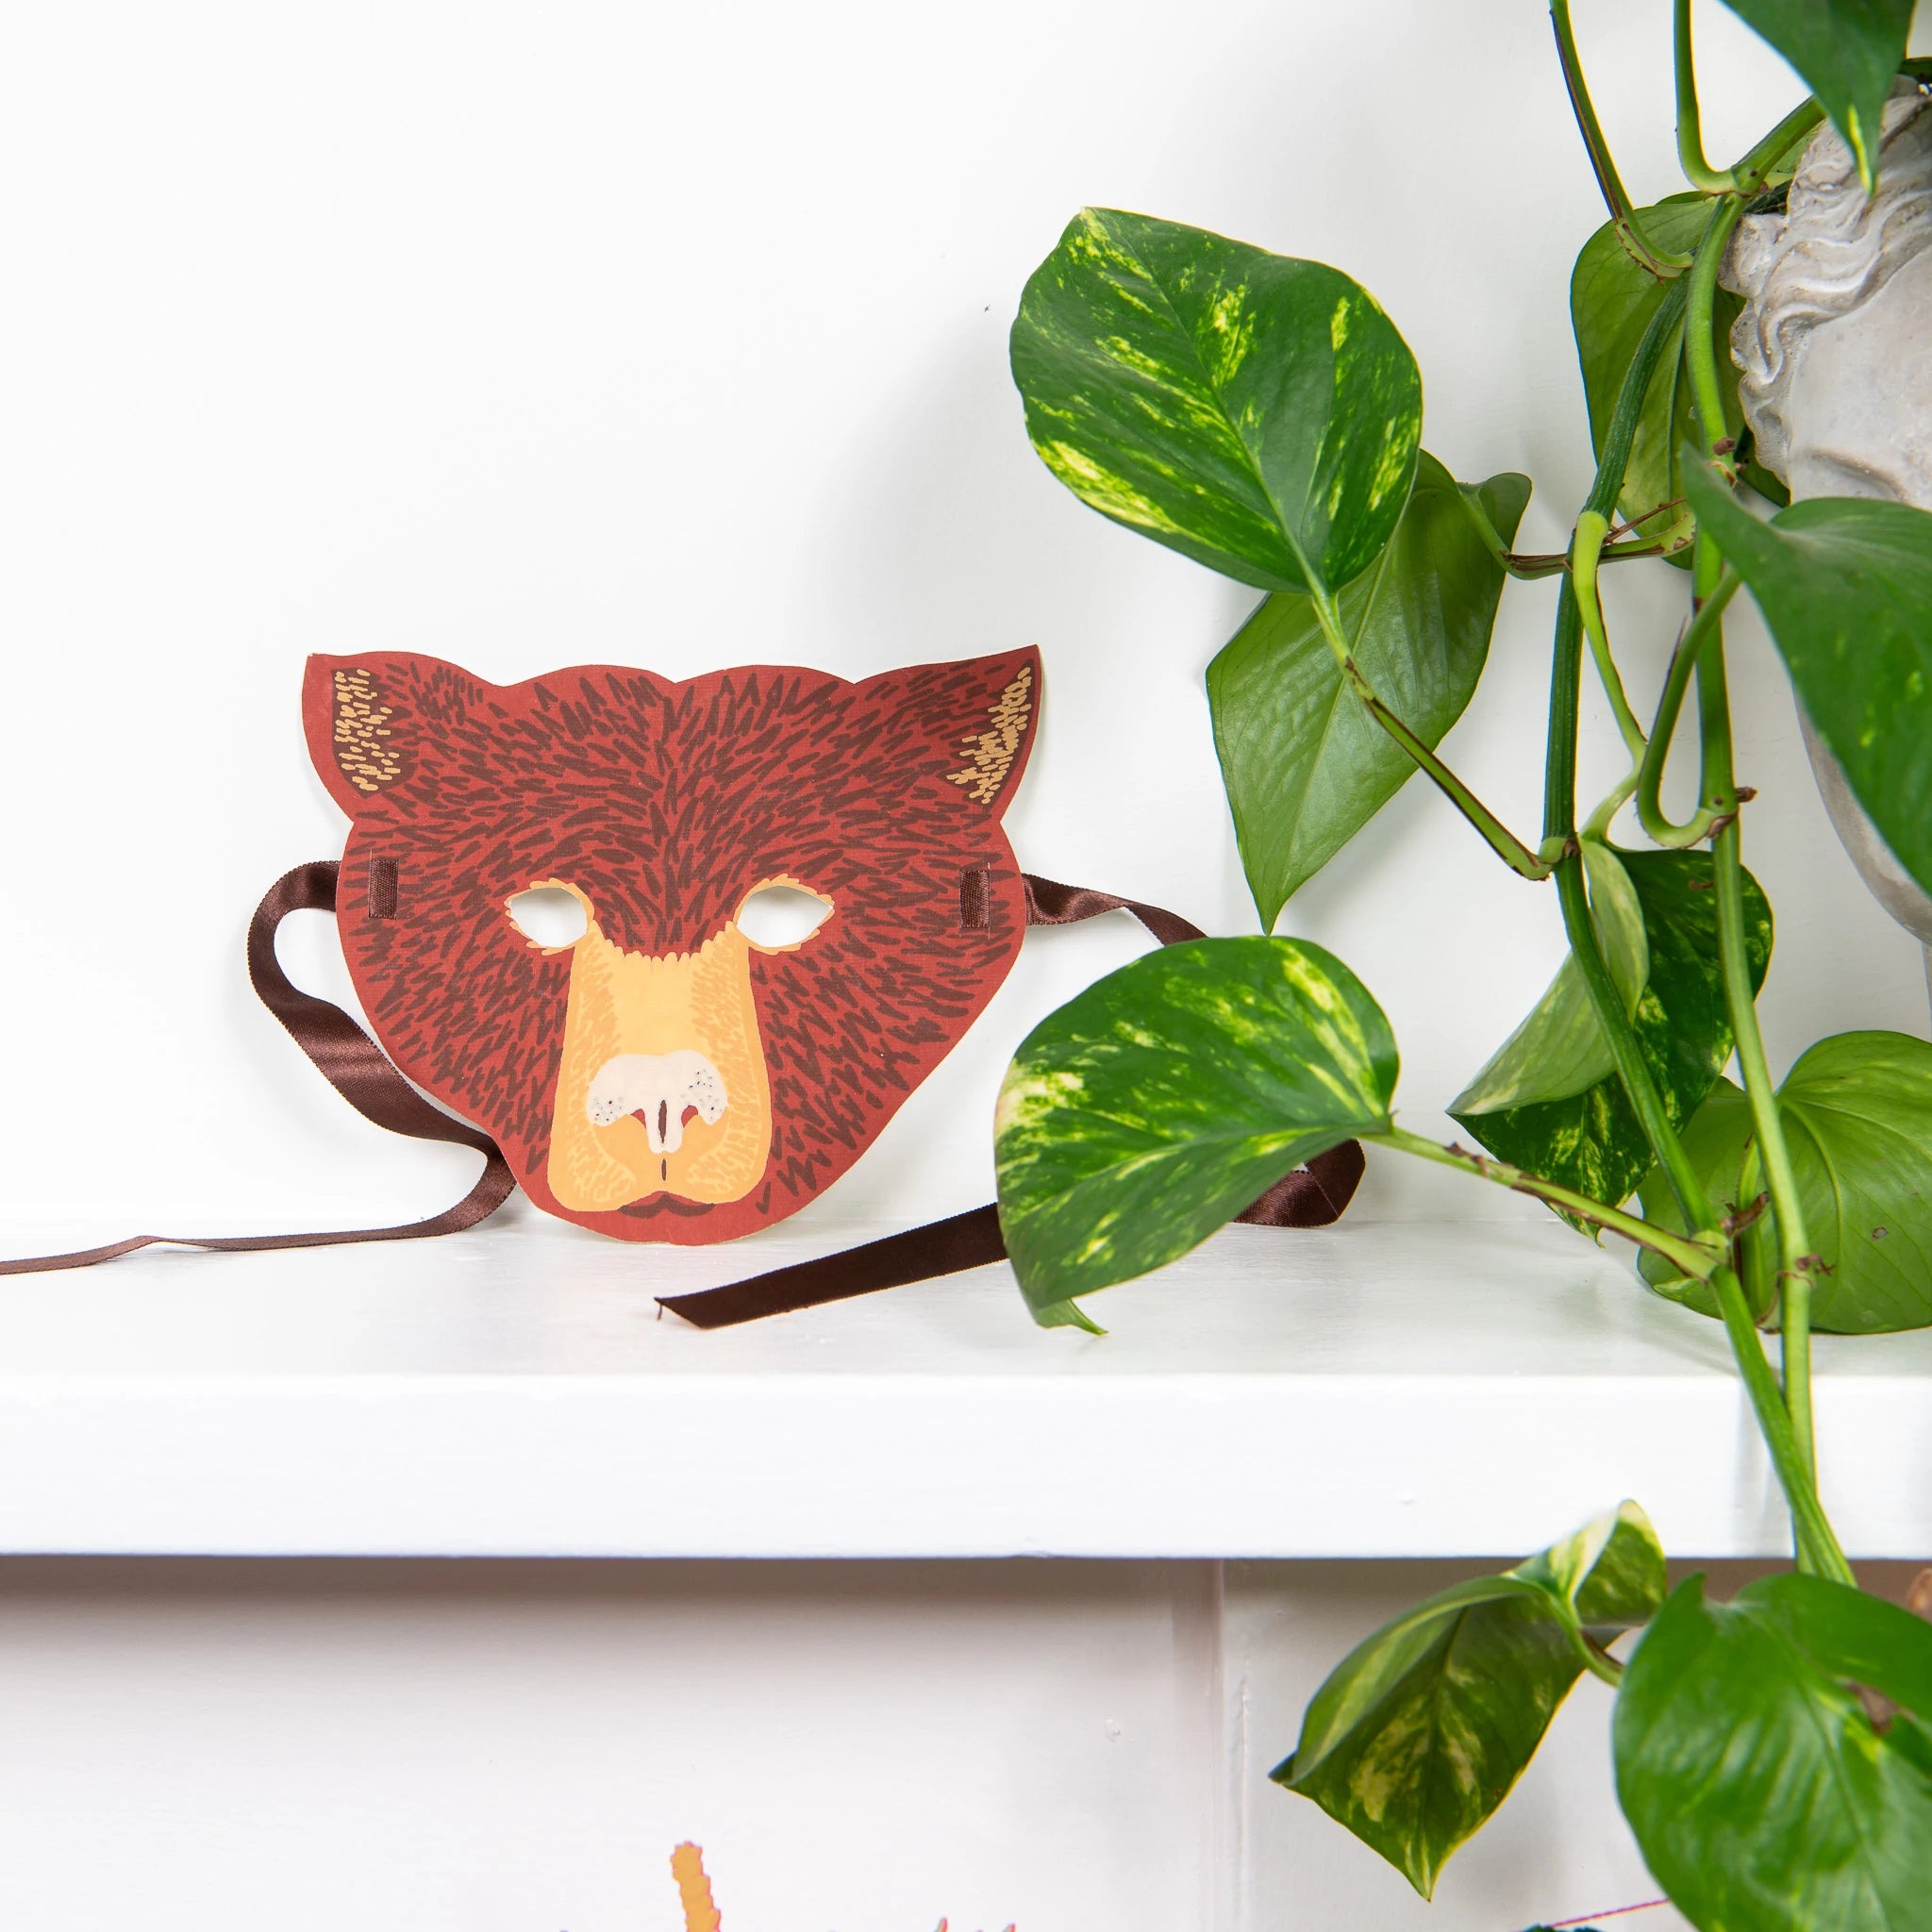 East End Press Bear Mask Greeting Card